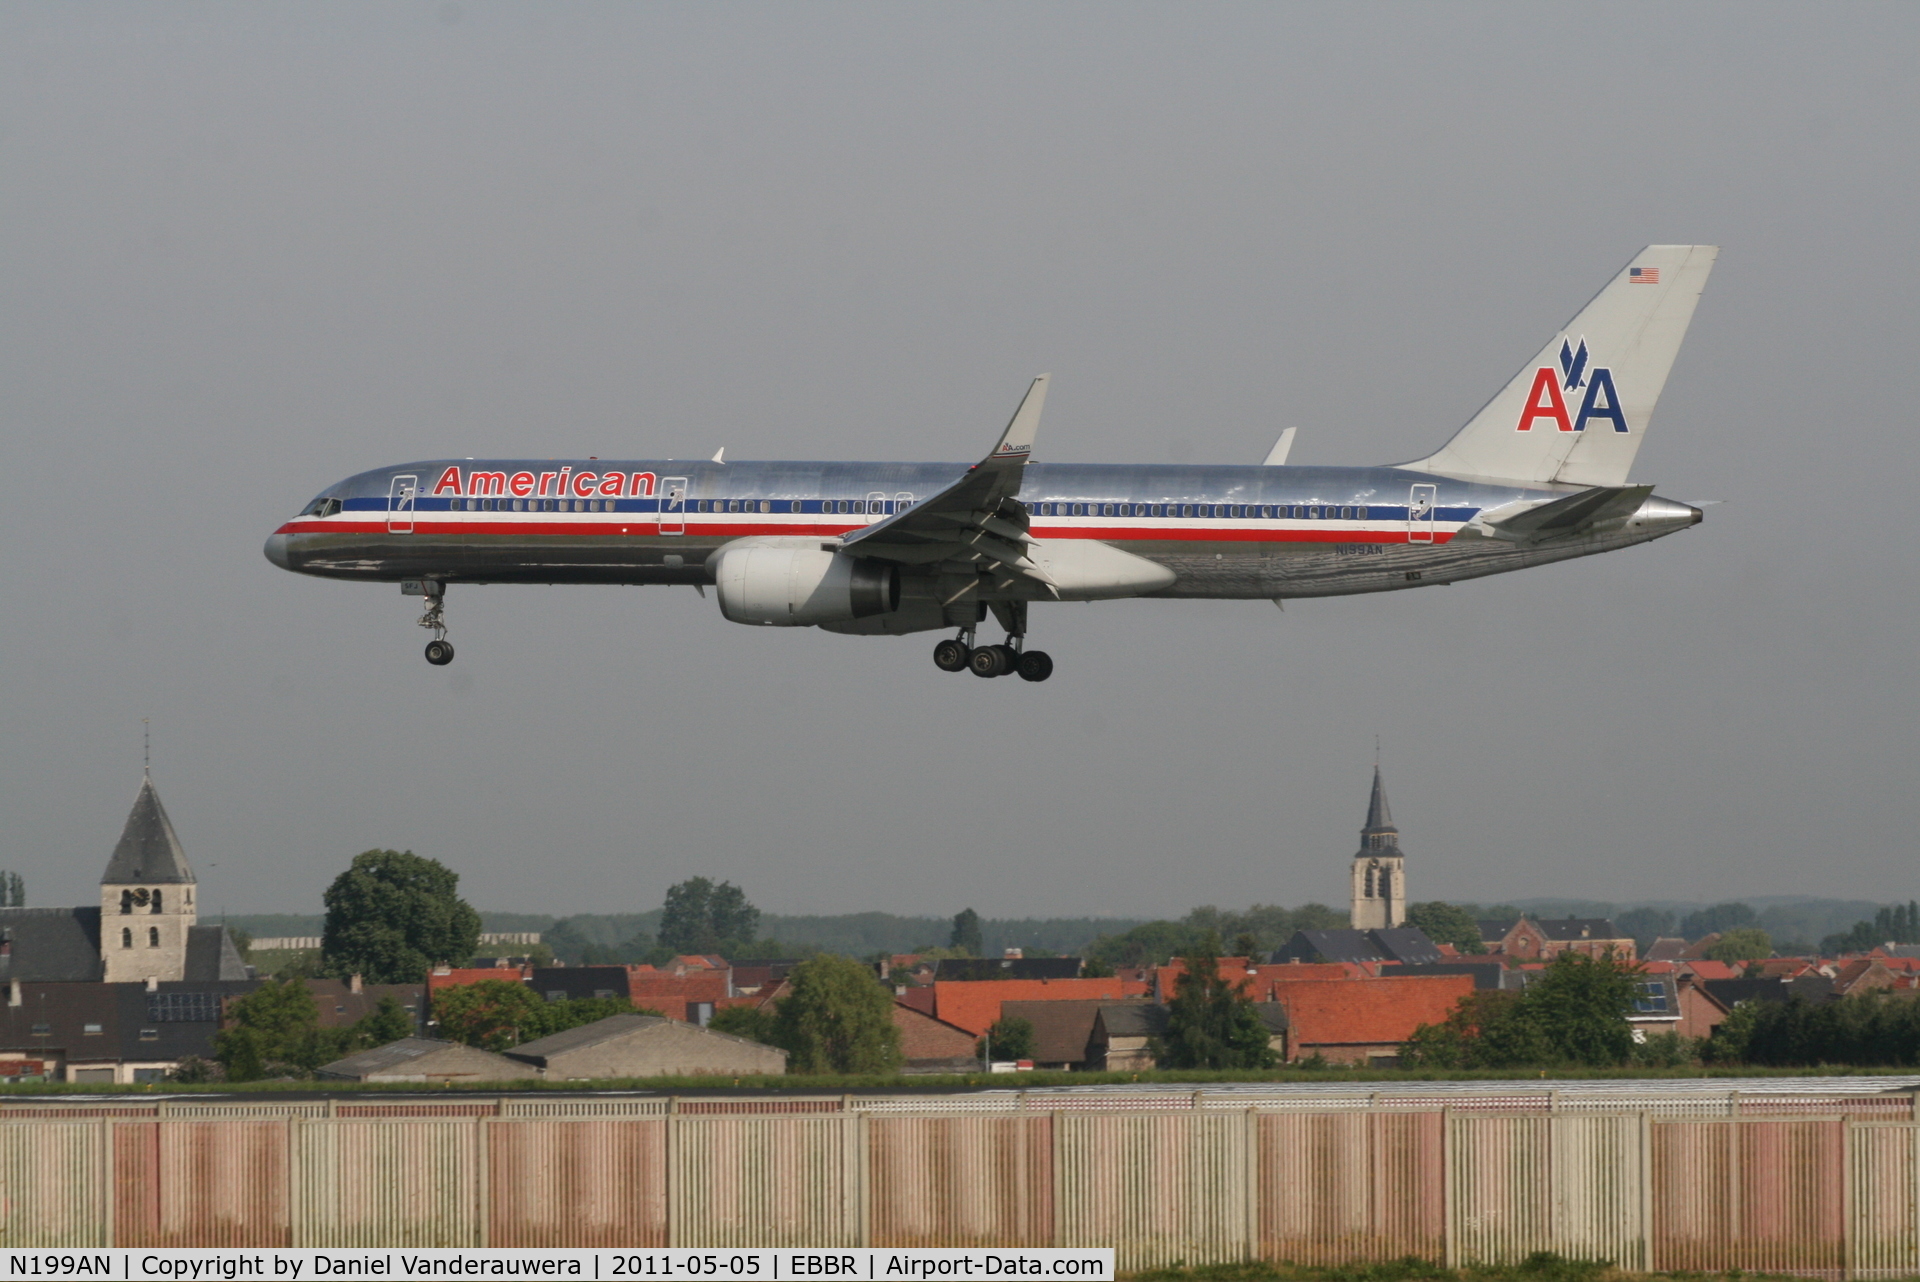 N199AN, 2001 Boeing 757-223 C/N 32393, Flight AA172 is descending to RWY 25L